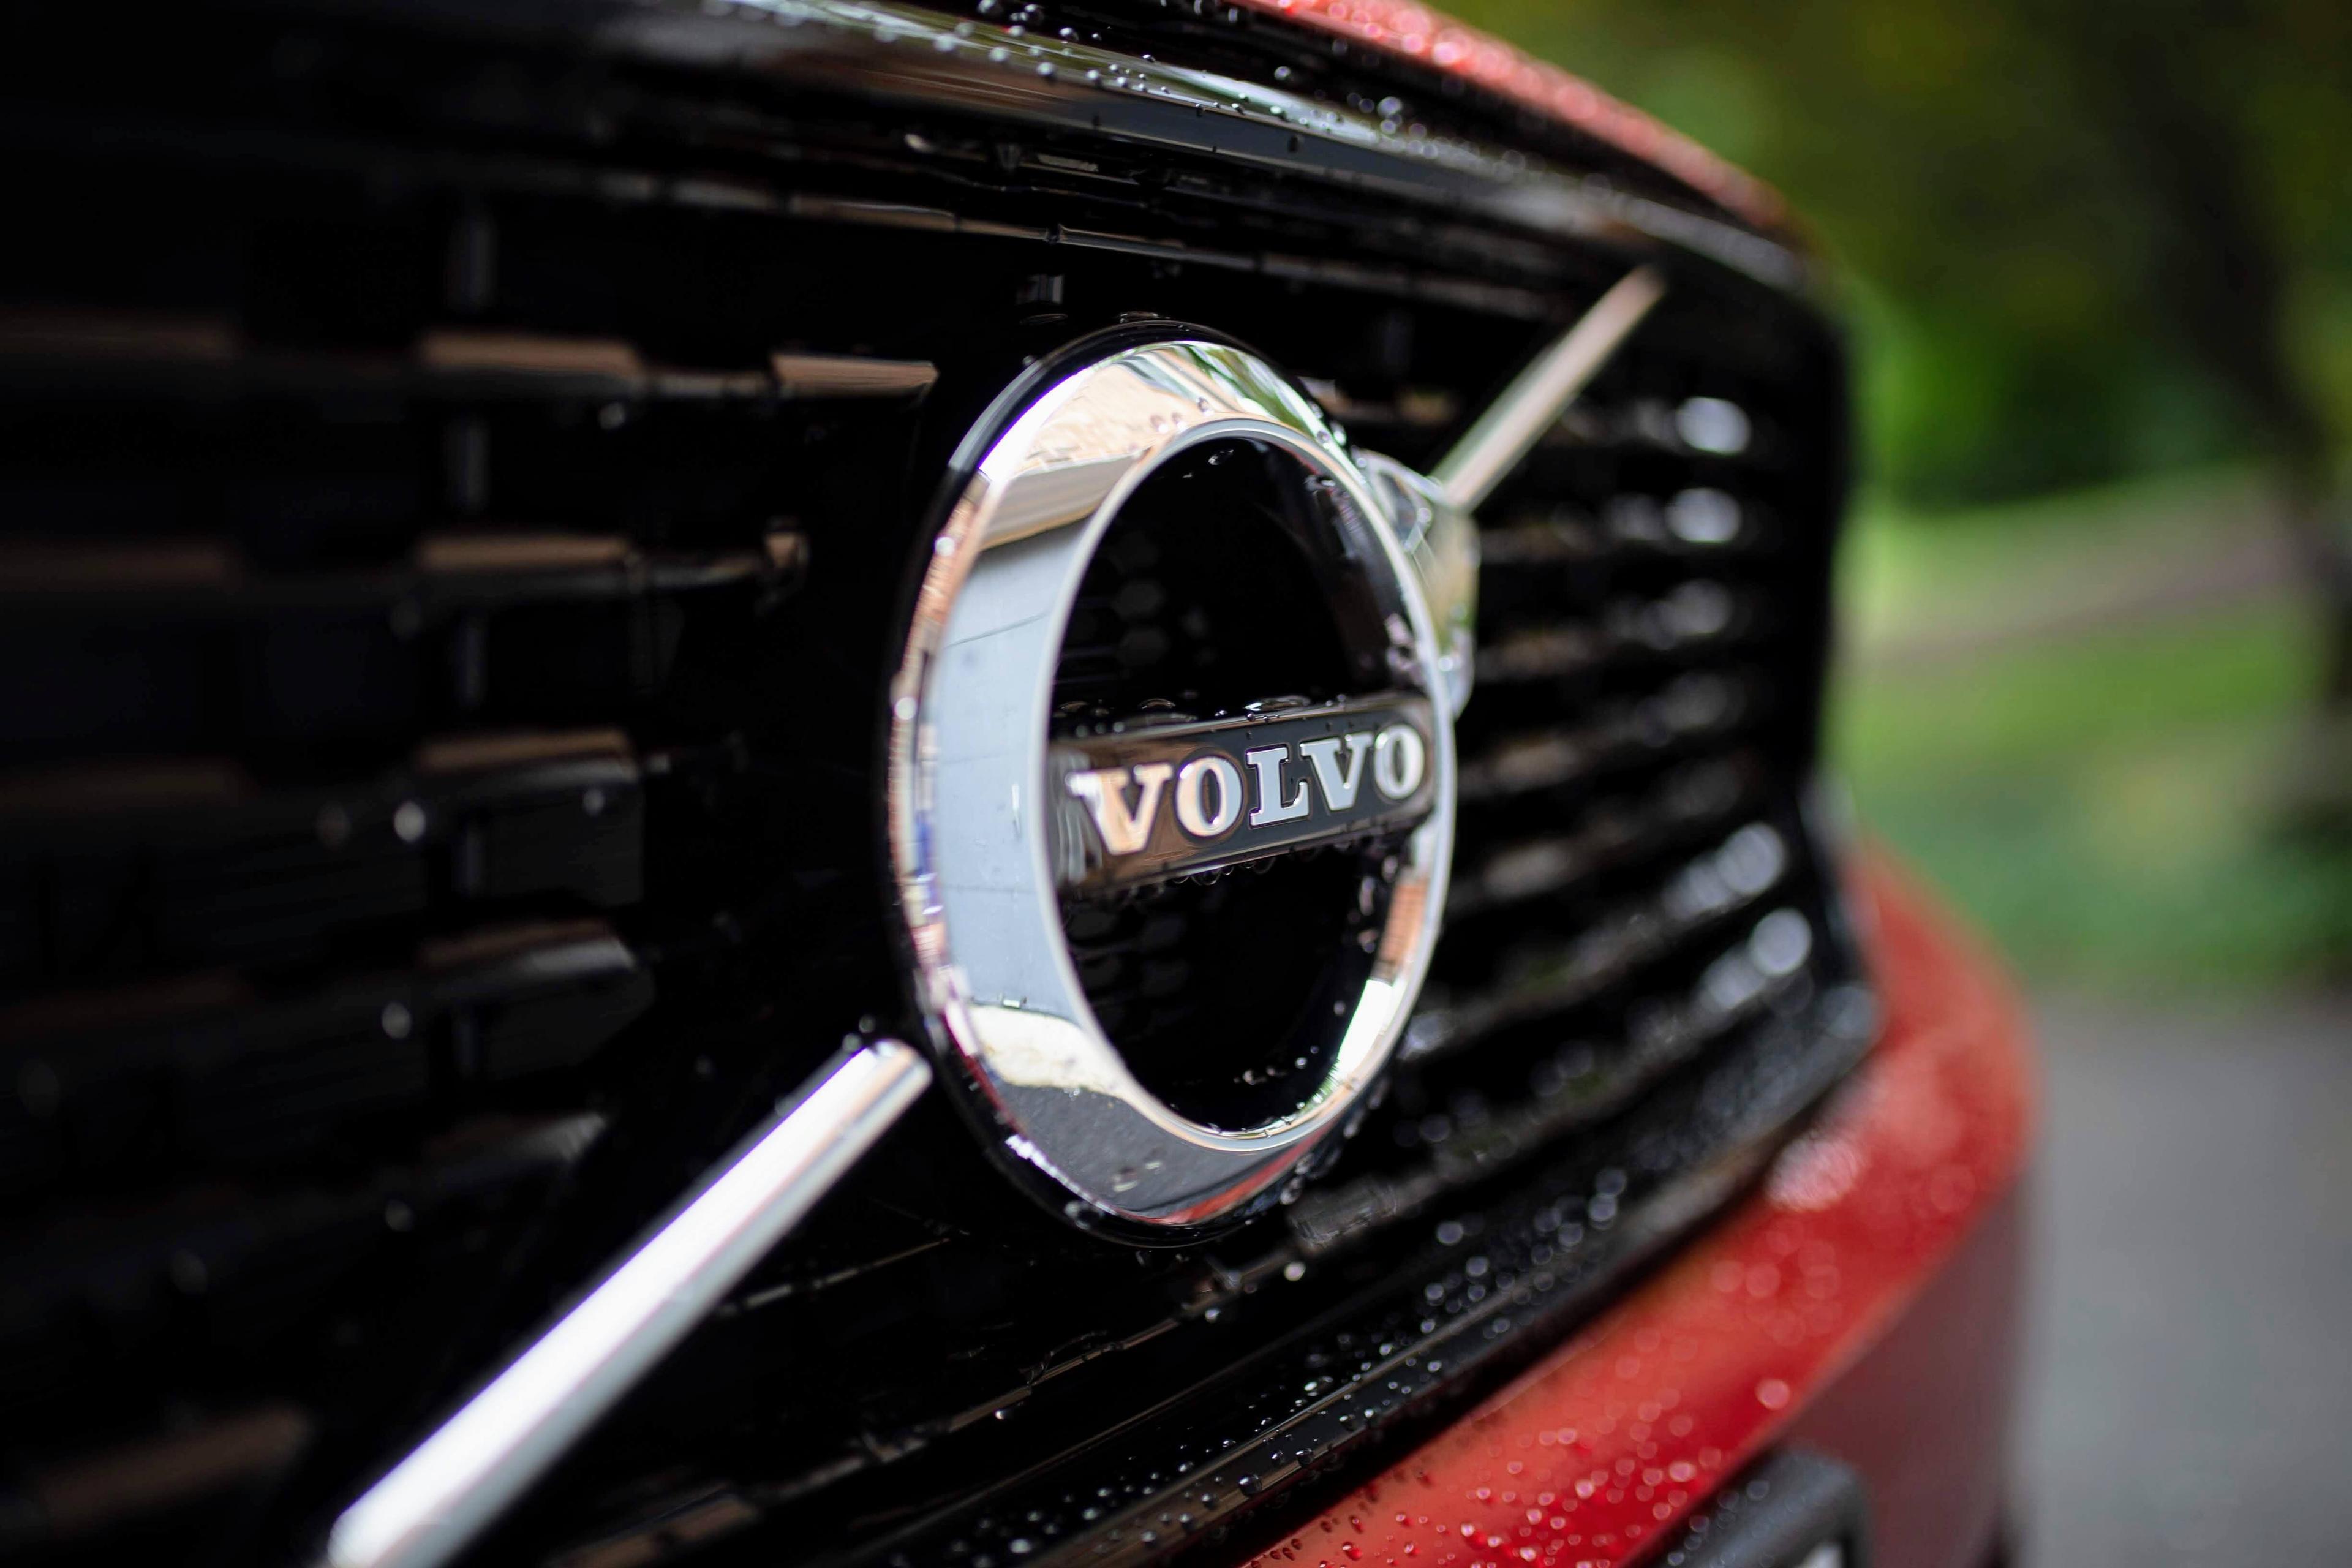 Volvo Trademark Holding AB